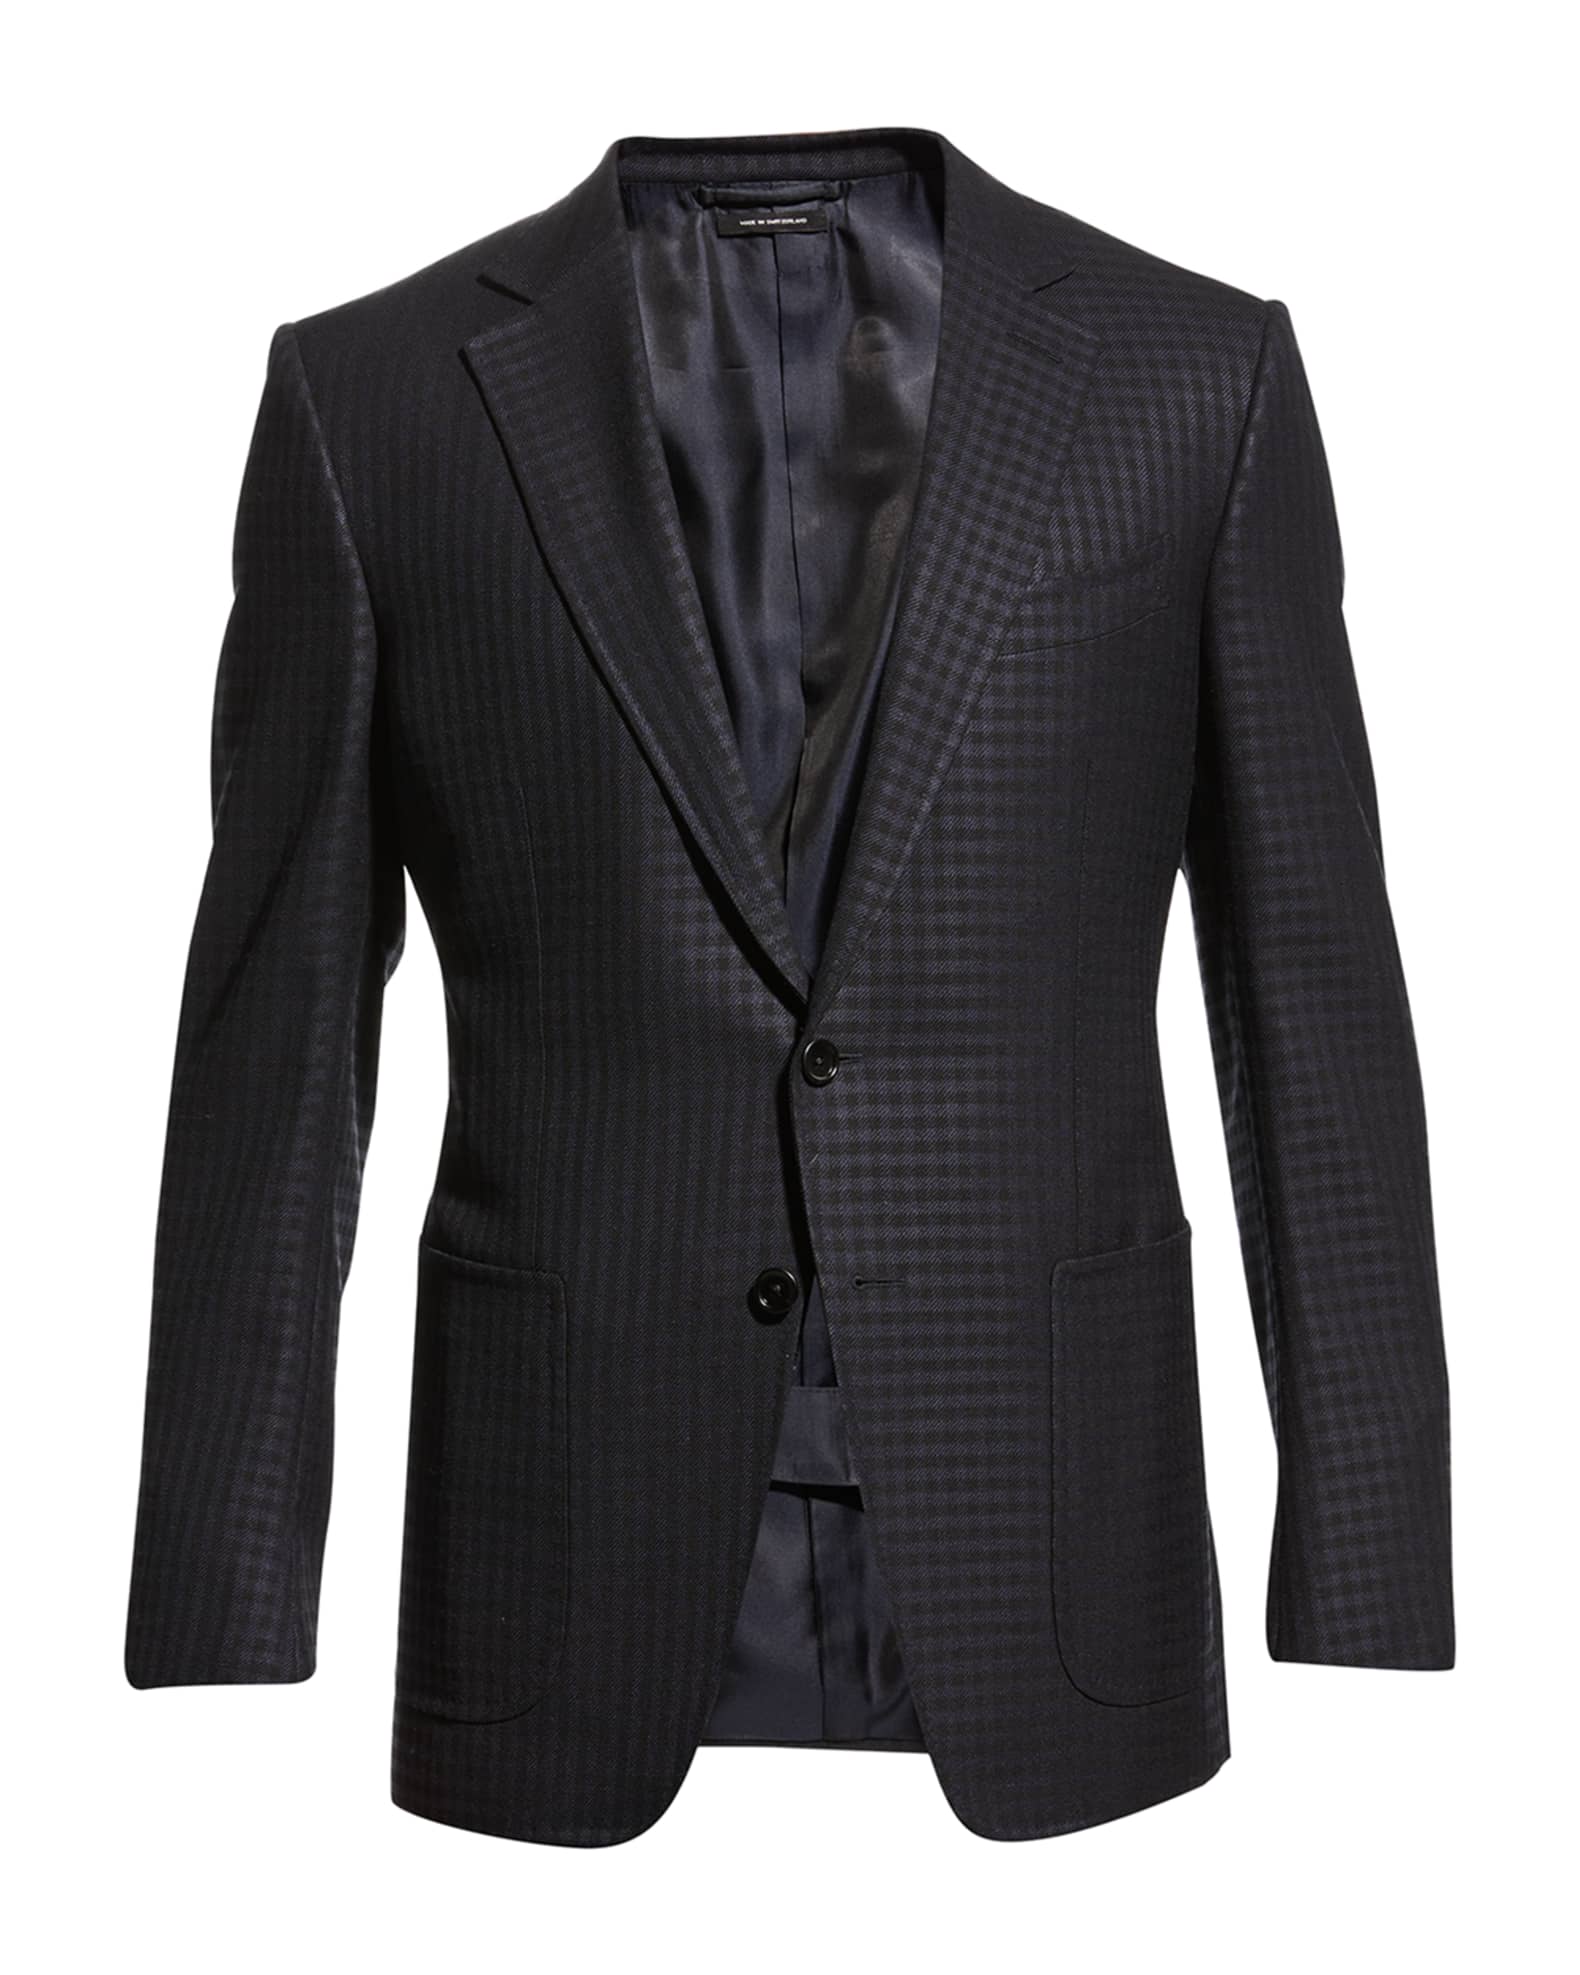 TOM FORD Men's Small Box Wool-Blend Sport Jacket | Neiman Marcus